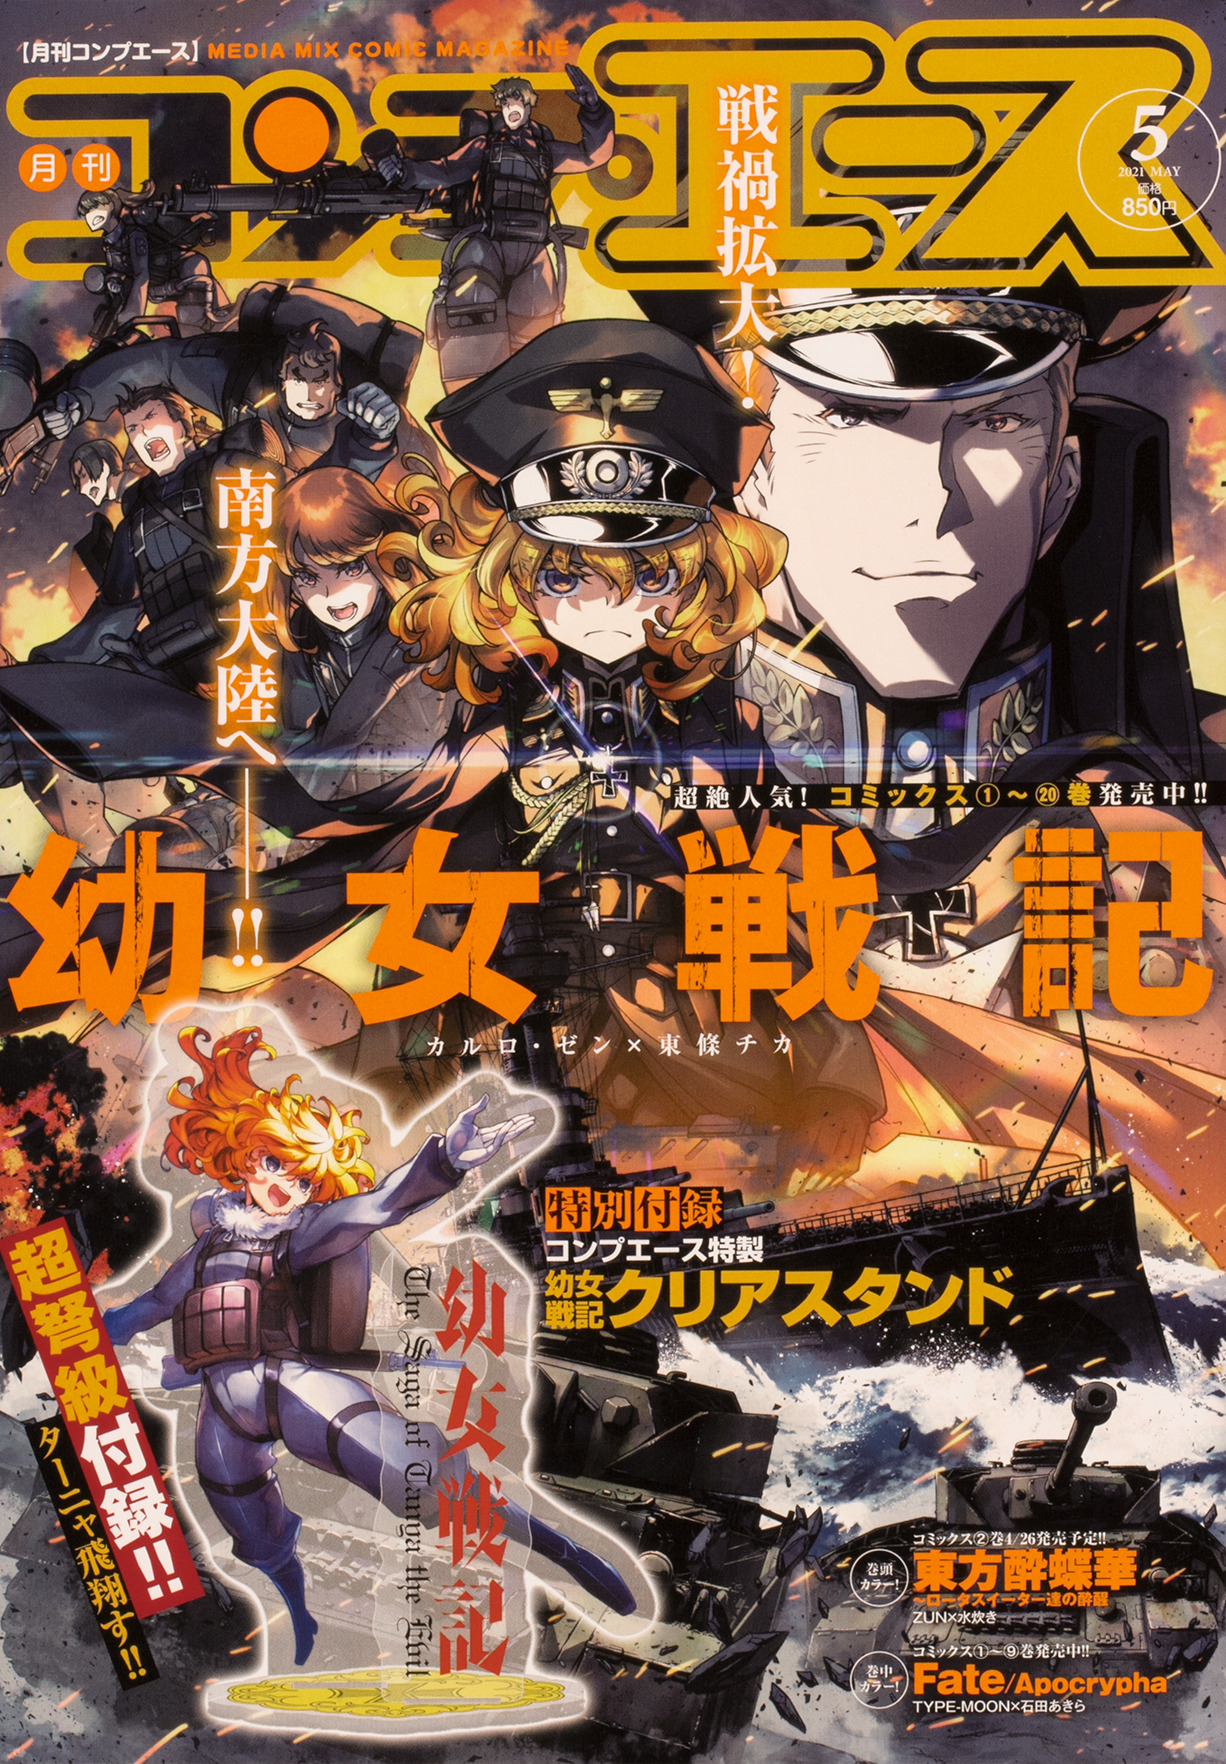 Kadokawa公式ショップ ｆａｔｅ Grand Order コミックアラカルト Plus Sp 対決編 本 カドカワストア オリジナル特典 本 関連グッズ Blu Ray Dvd Cd